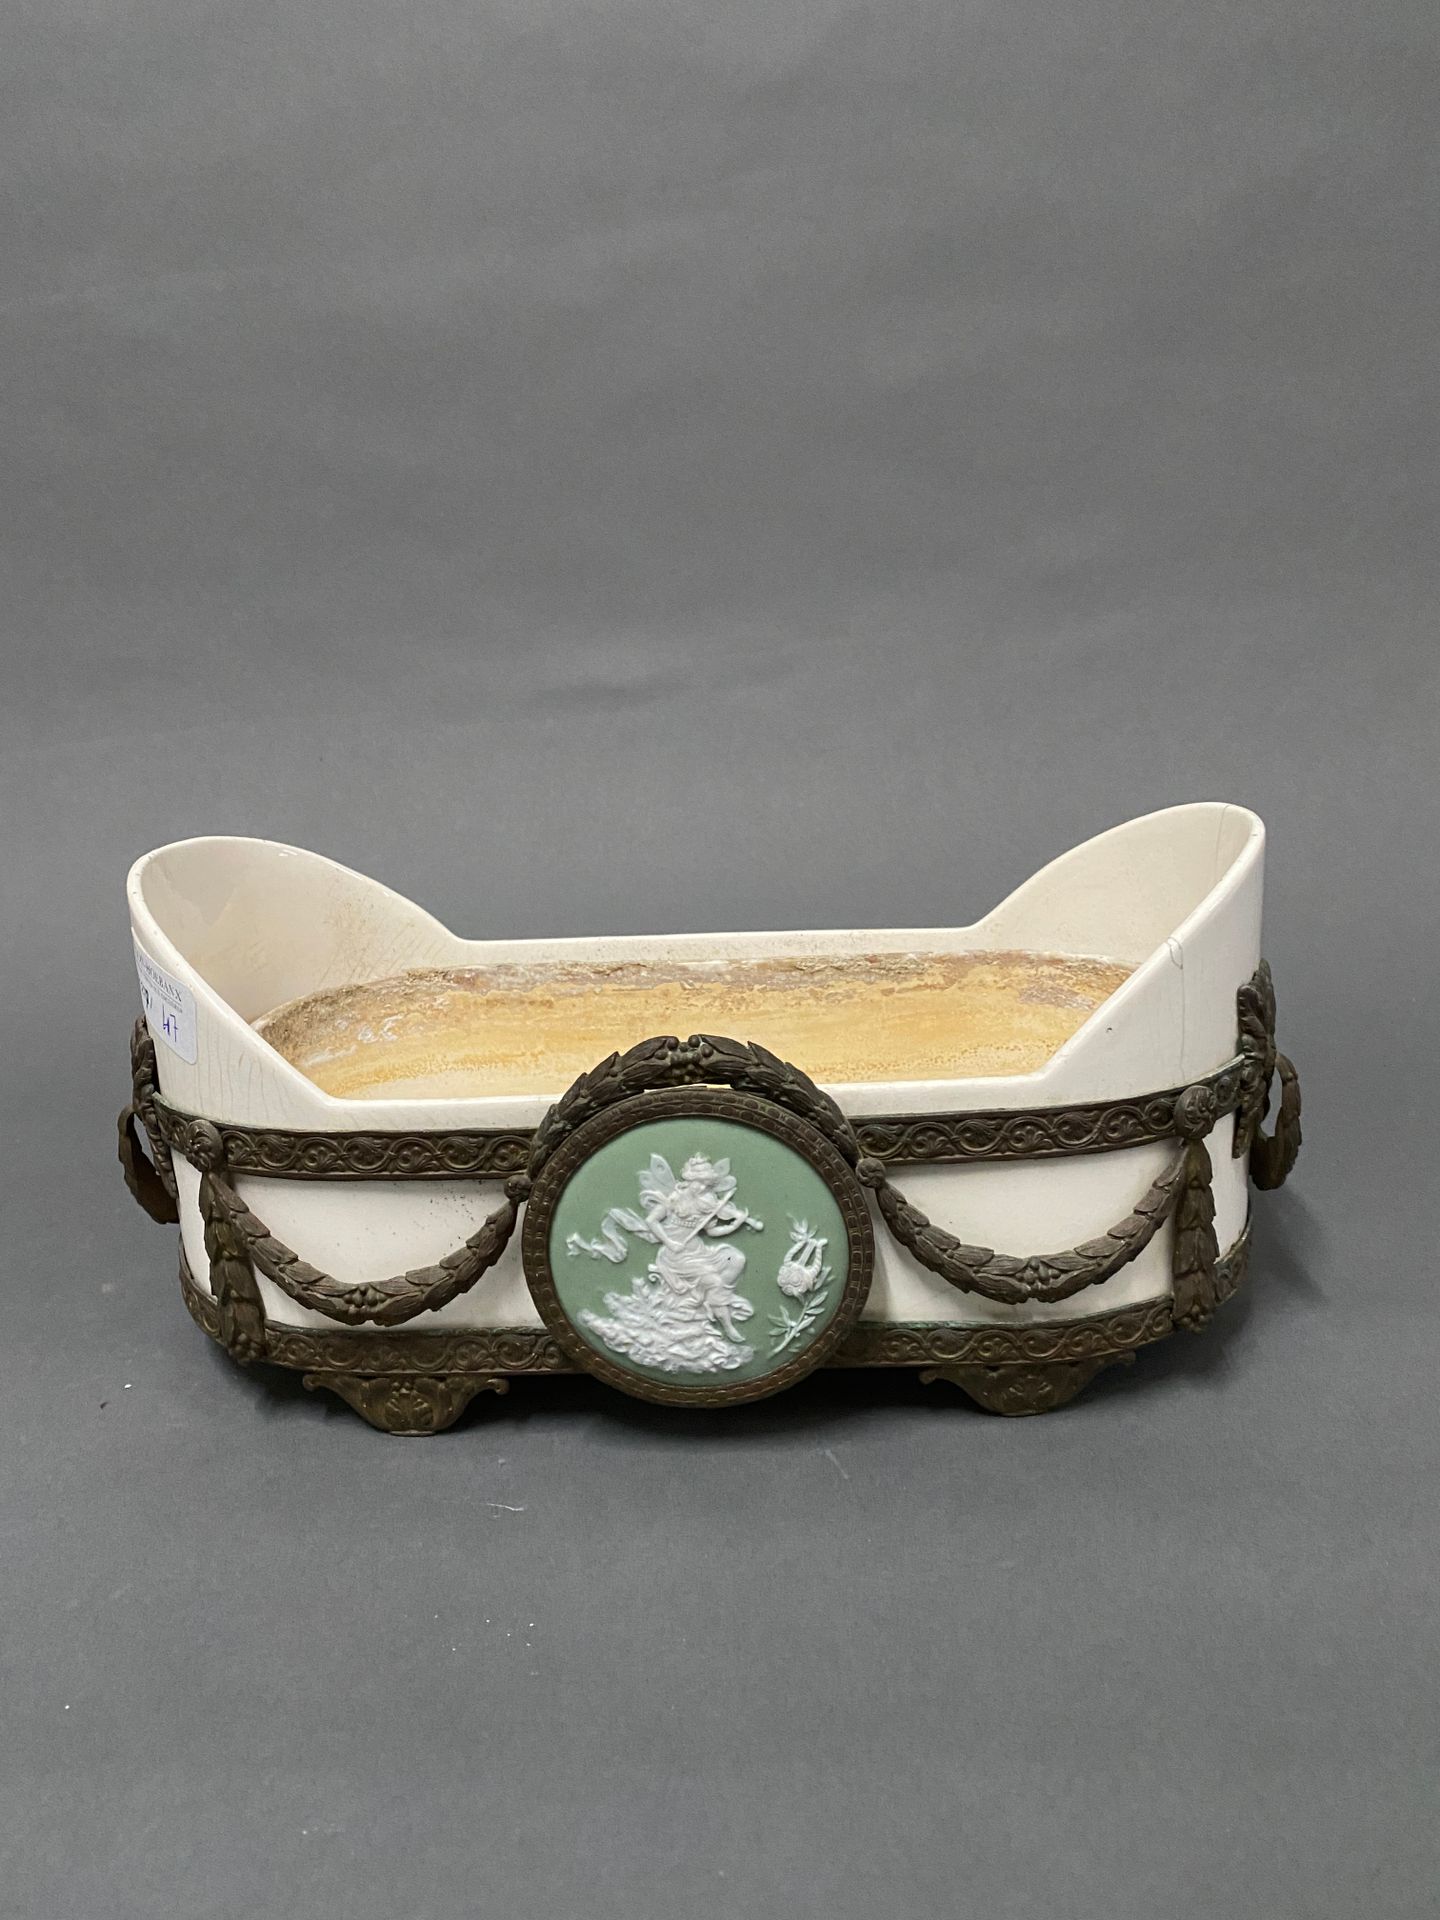 Null 维也纳

椭圆形的小陶瓷花盆，装在黄铜框架里，上面装饰着韦奇伍德风格的绿底白字的饼干状徽章。

高：12 - 长：28 - 宽：14厘米

(裂缝)